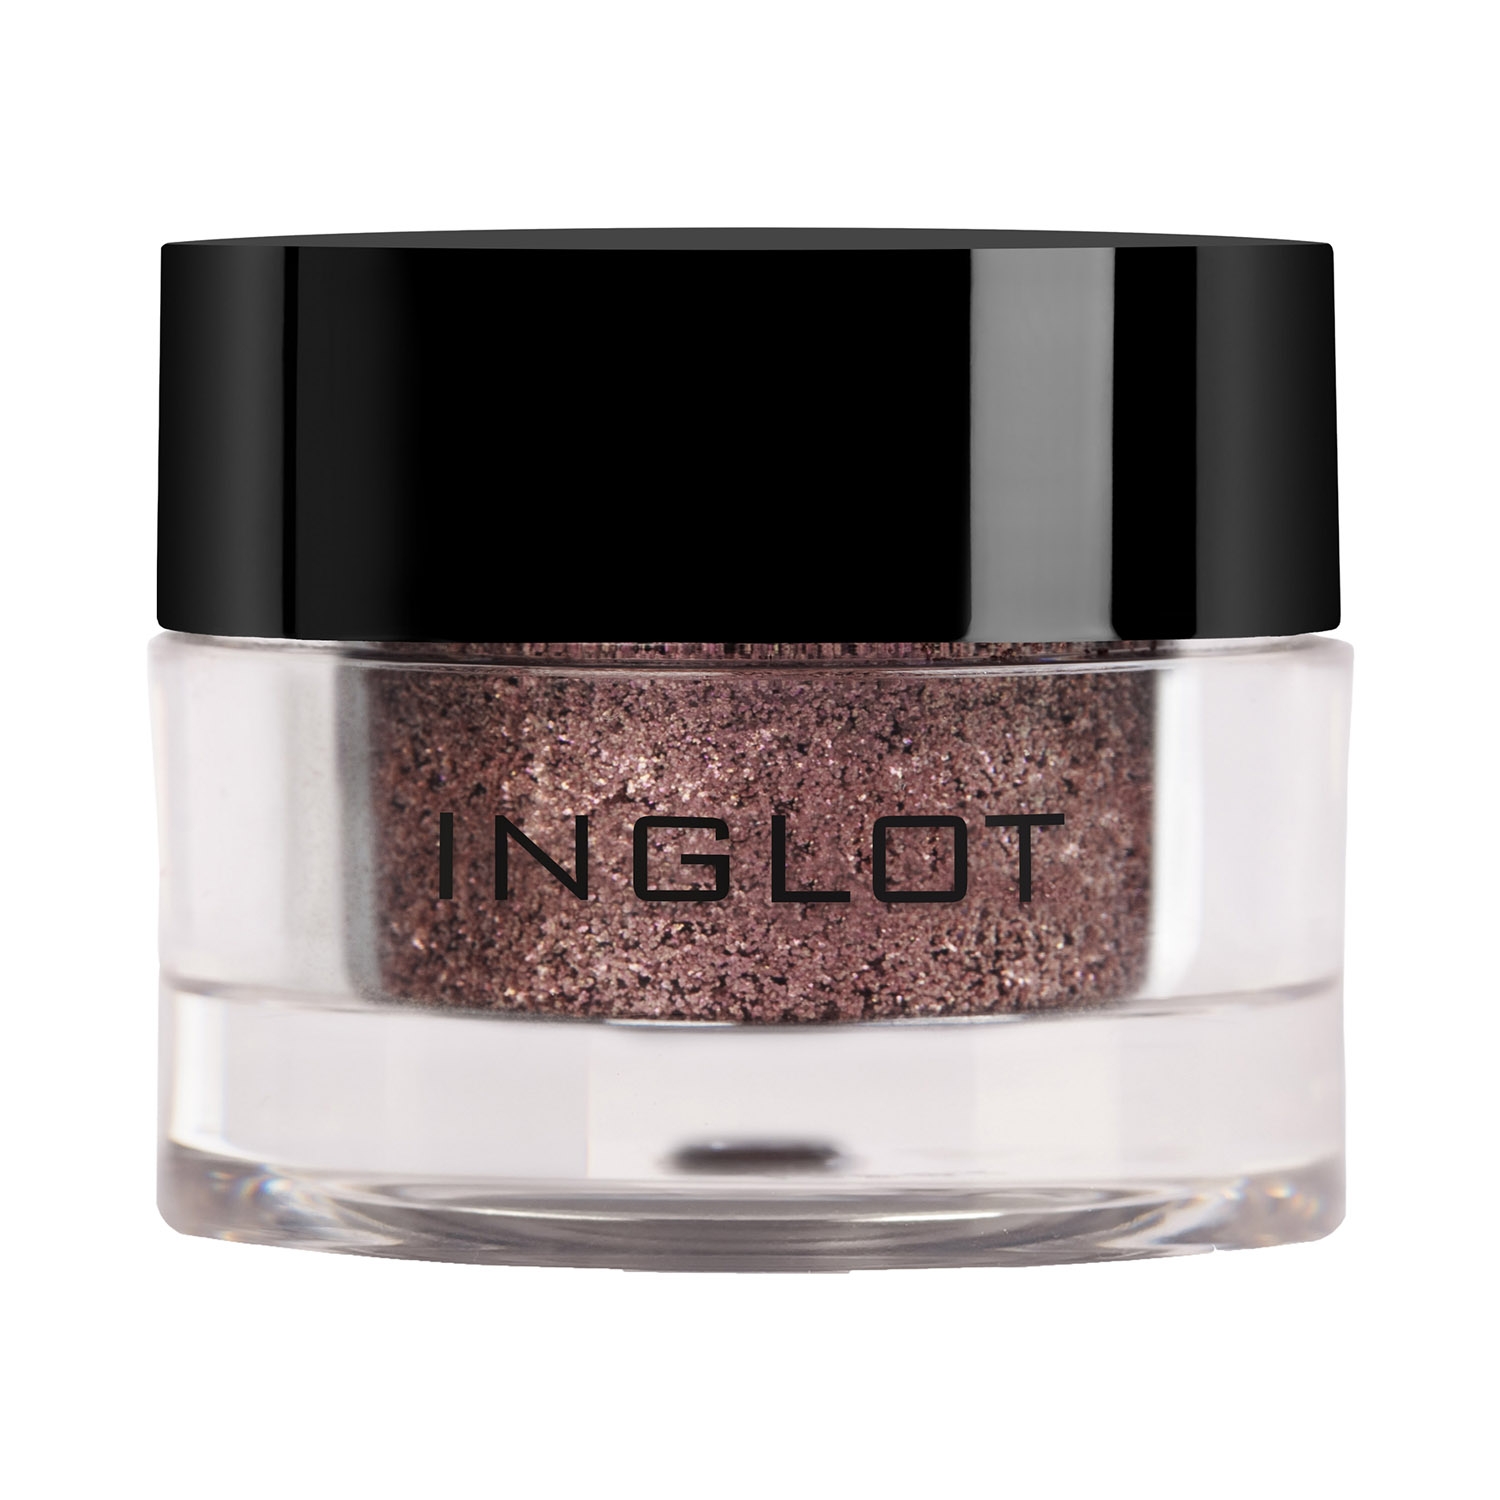 INGLOT | INGLOT Amc Pure Pigment Eye Shadow - 125 Shade (2g)